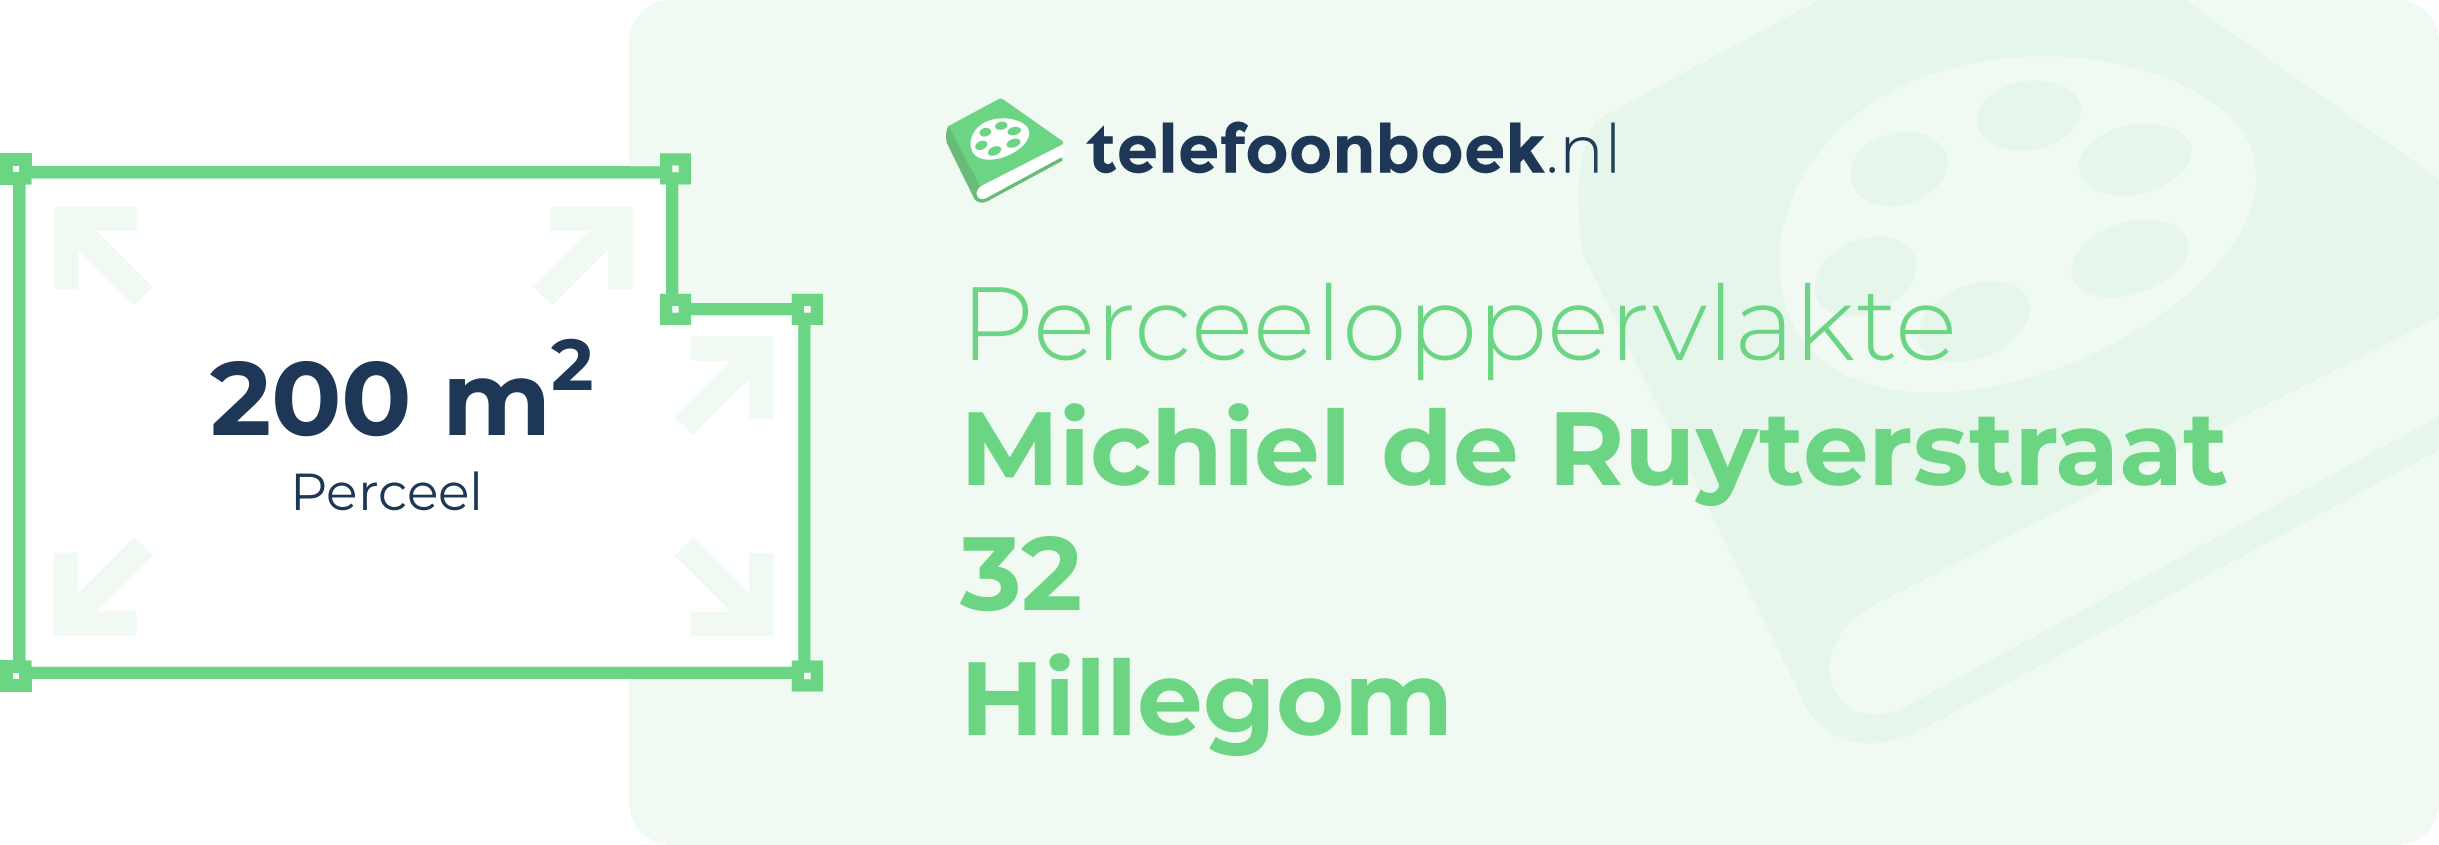 Perceeloppervlakte Michiel De Ruyterstraat 32 Hillegom